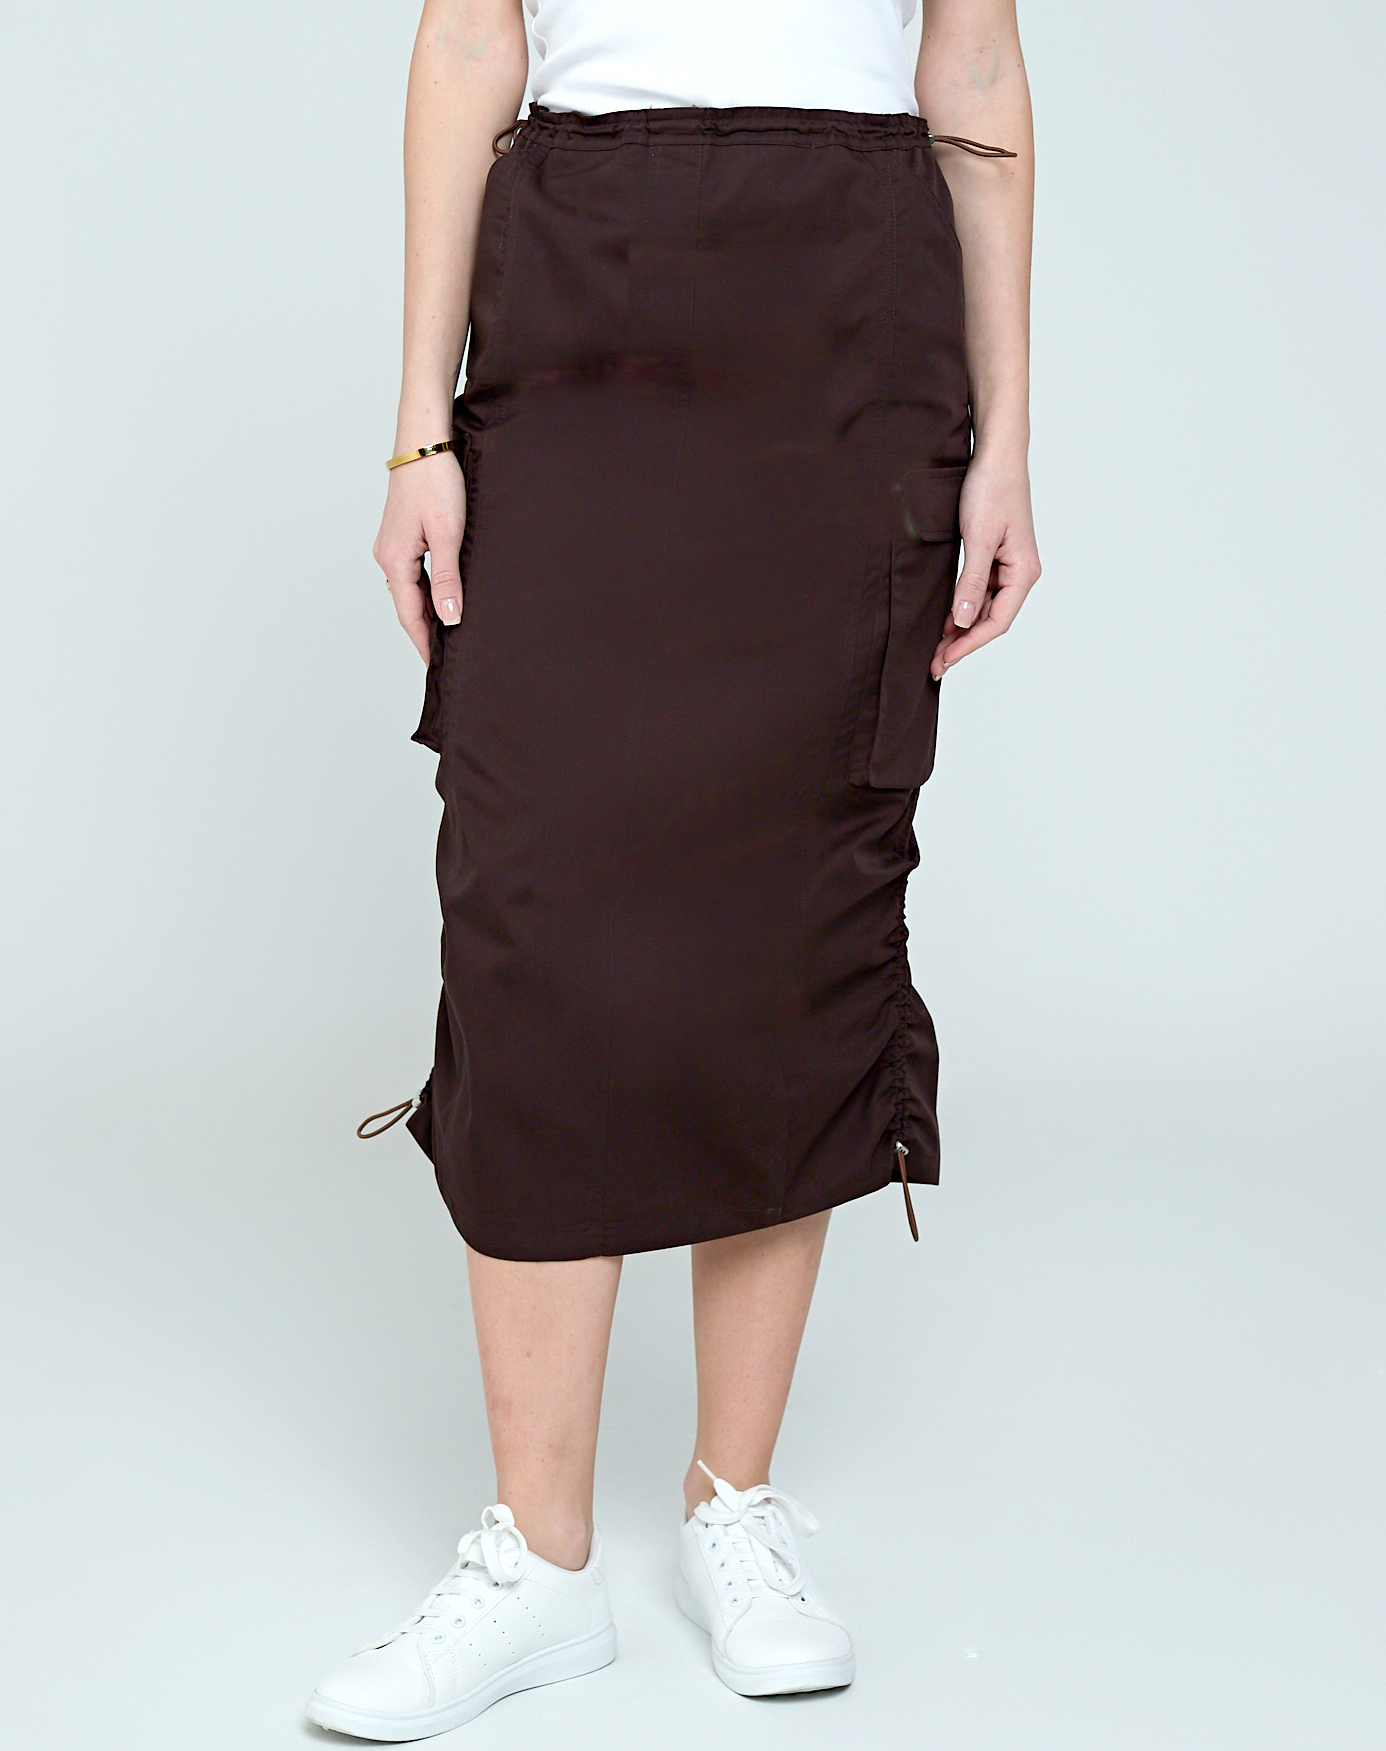 Юбка женская IRINA EGOROVA Cargo Skirt коричневая 48 RU